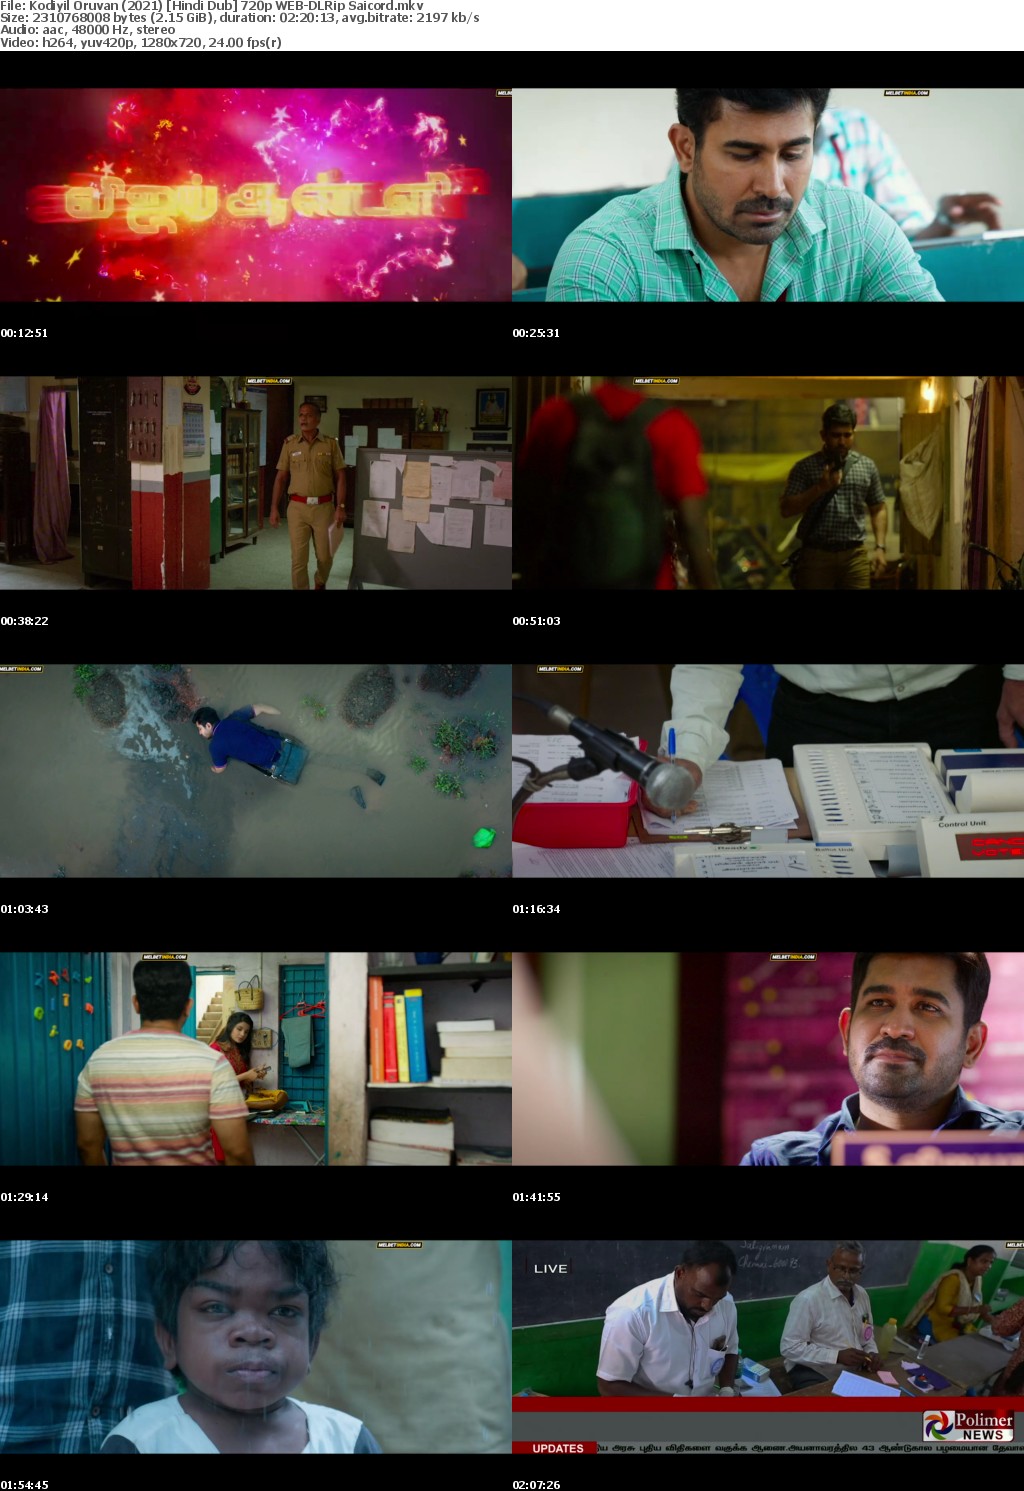 Kodiyil Oruvan (2021) Hindi Dub 720p WEB-DLRip Saicord